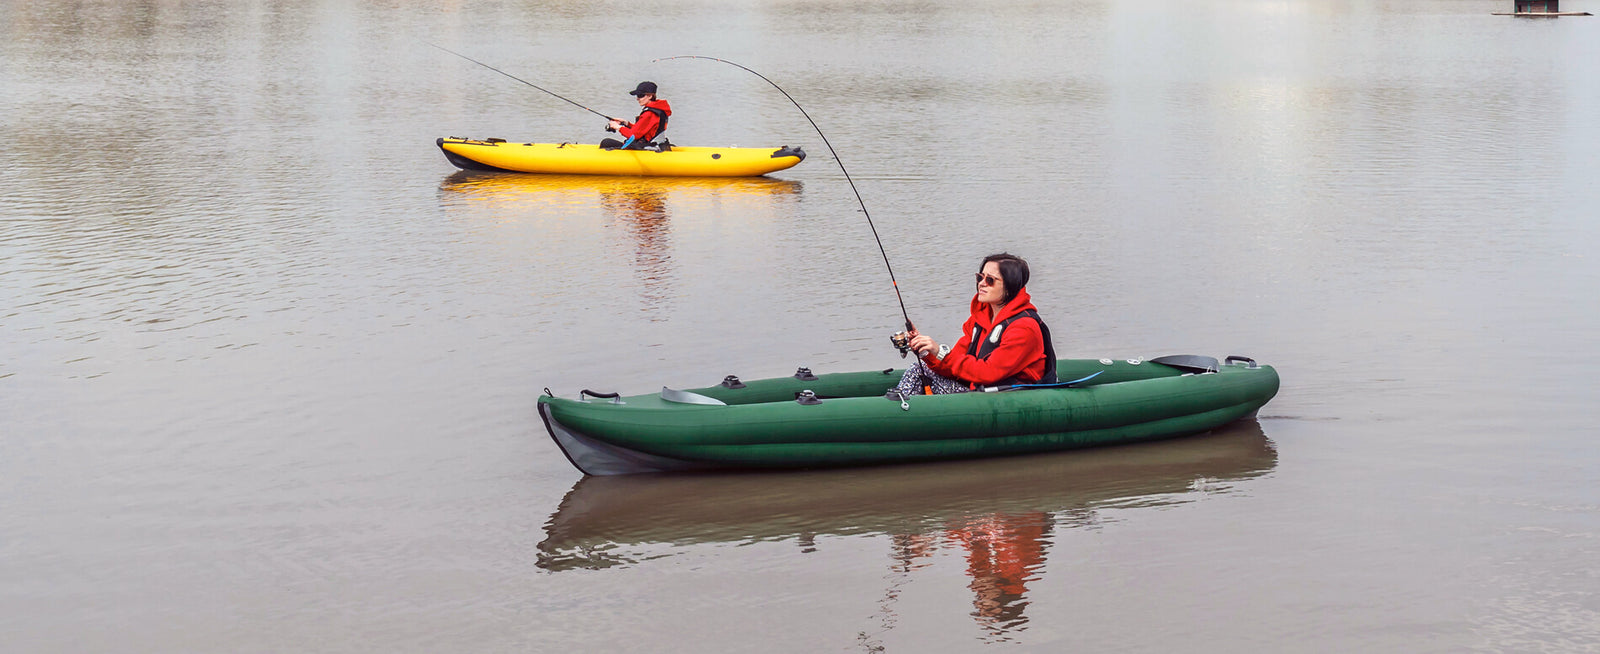 Best inflatable boat / kayak, fishing setup #inflatableboat #fishingkayak  #inflatablefishingkayak 